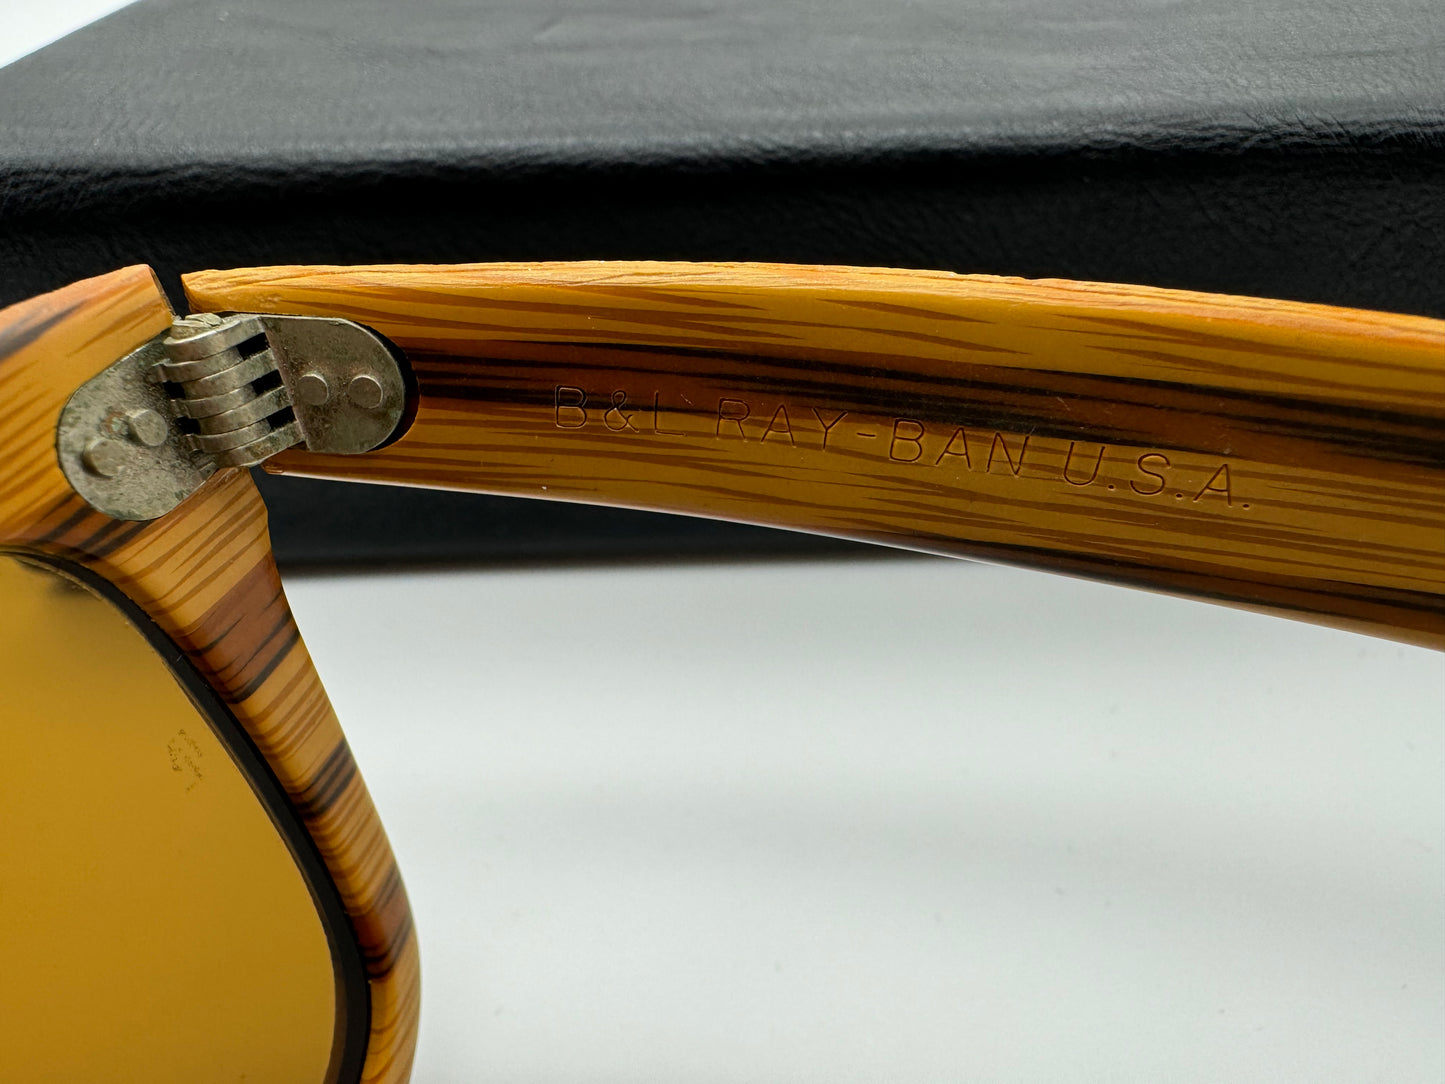 Vintage Ray-Ban Wayfarer Woodies 50mm L1582 Driftwood B-15 Sunglasses Preowned